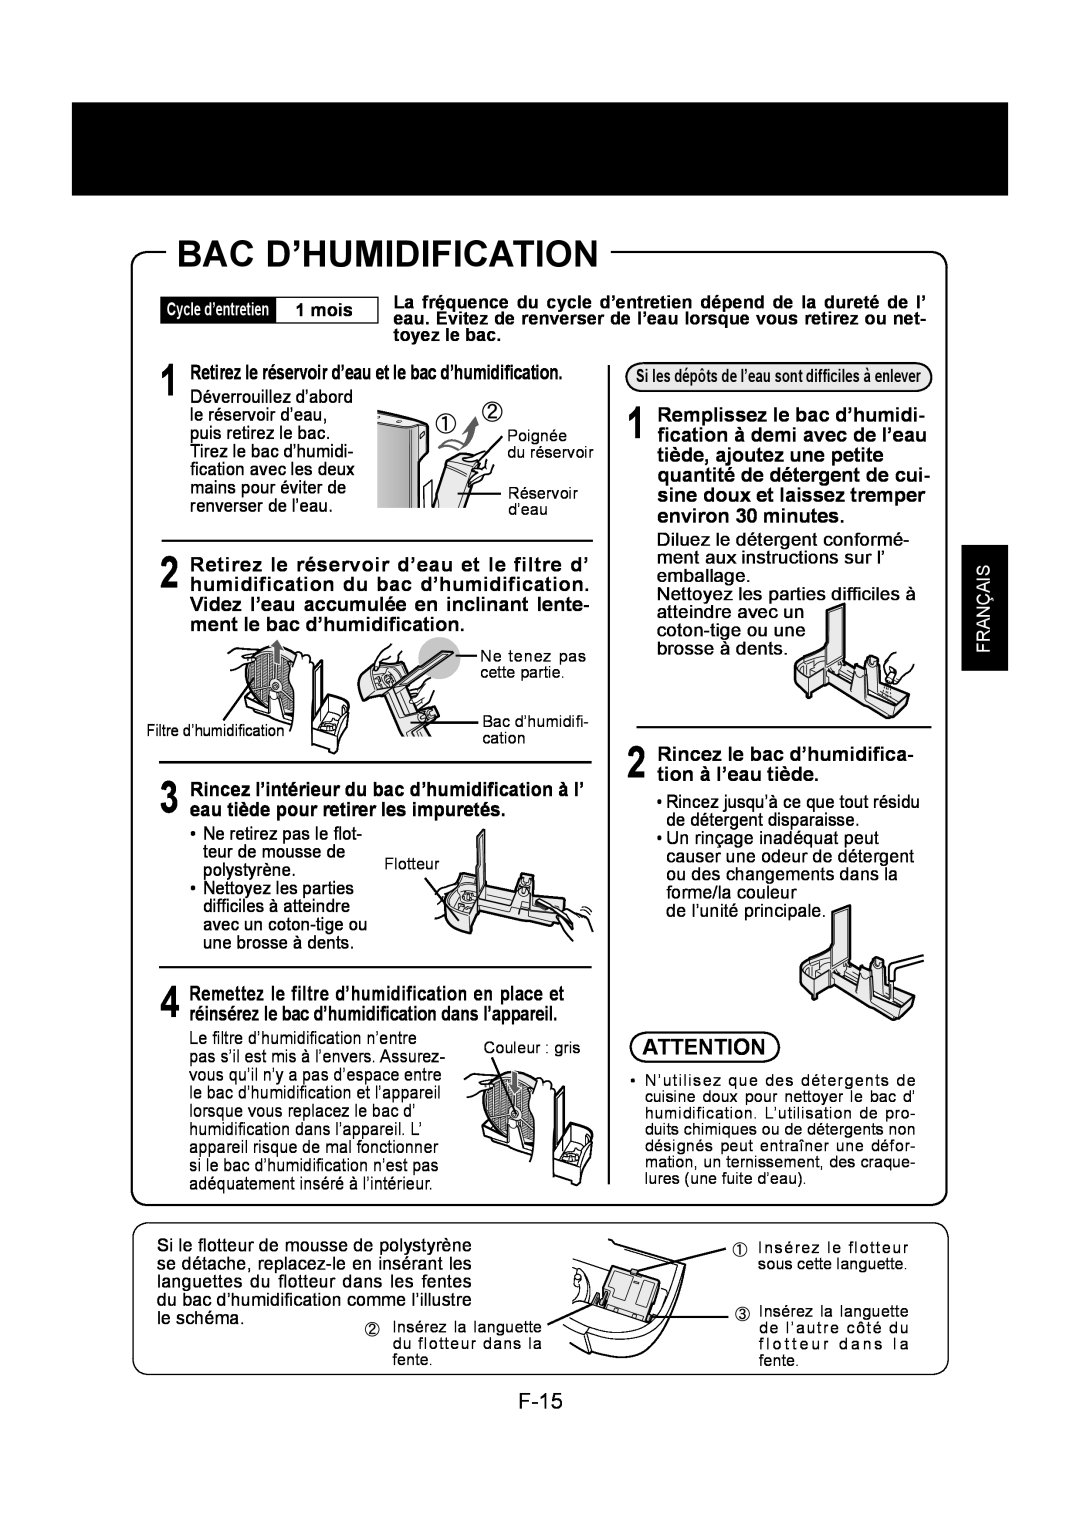 Sharp KC-860U operation manual Bac D’Humidification, F-15 